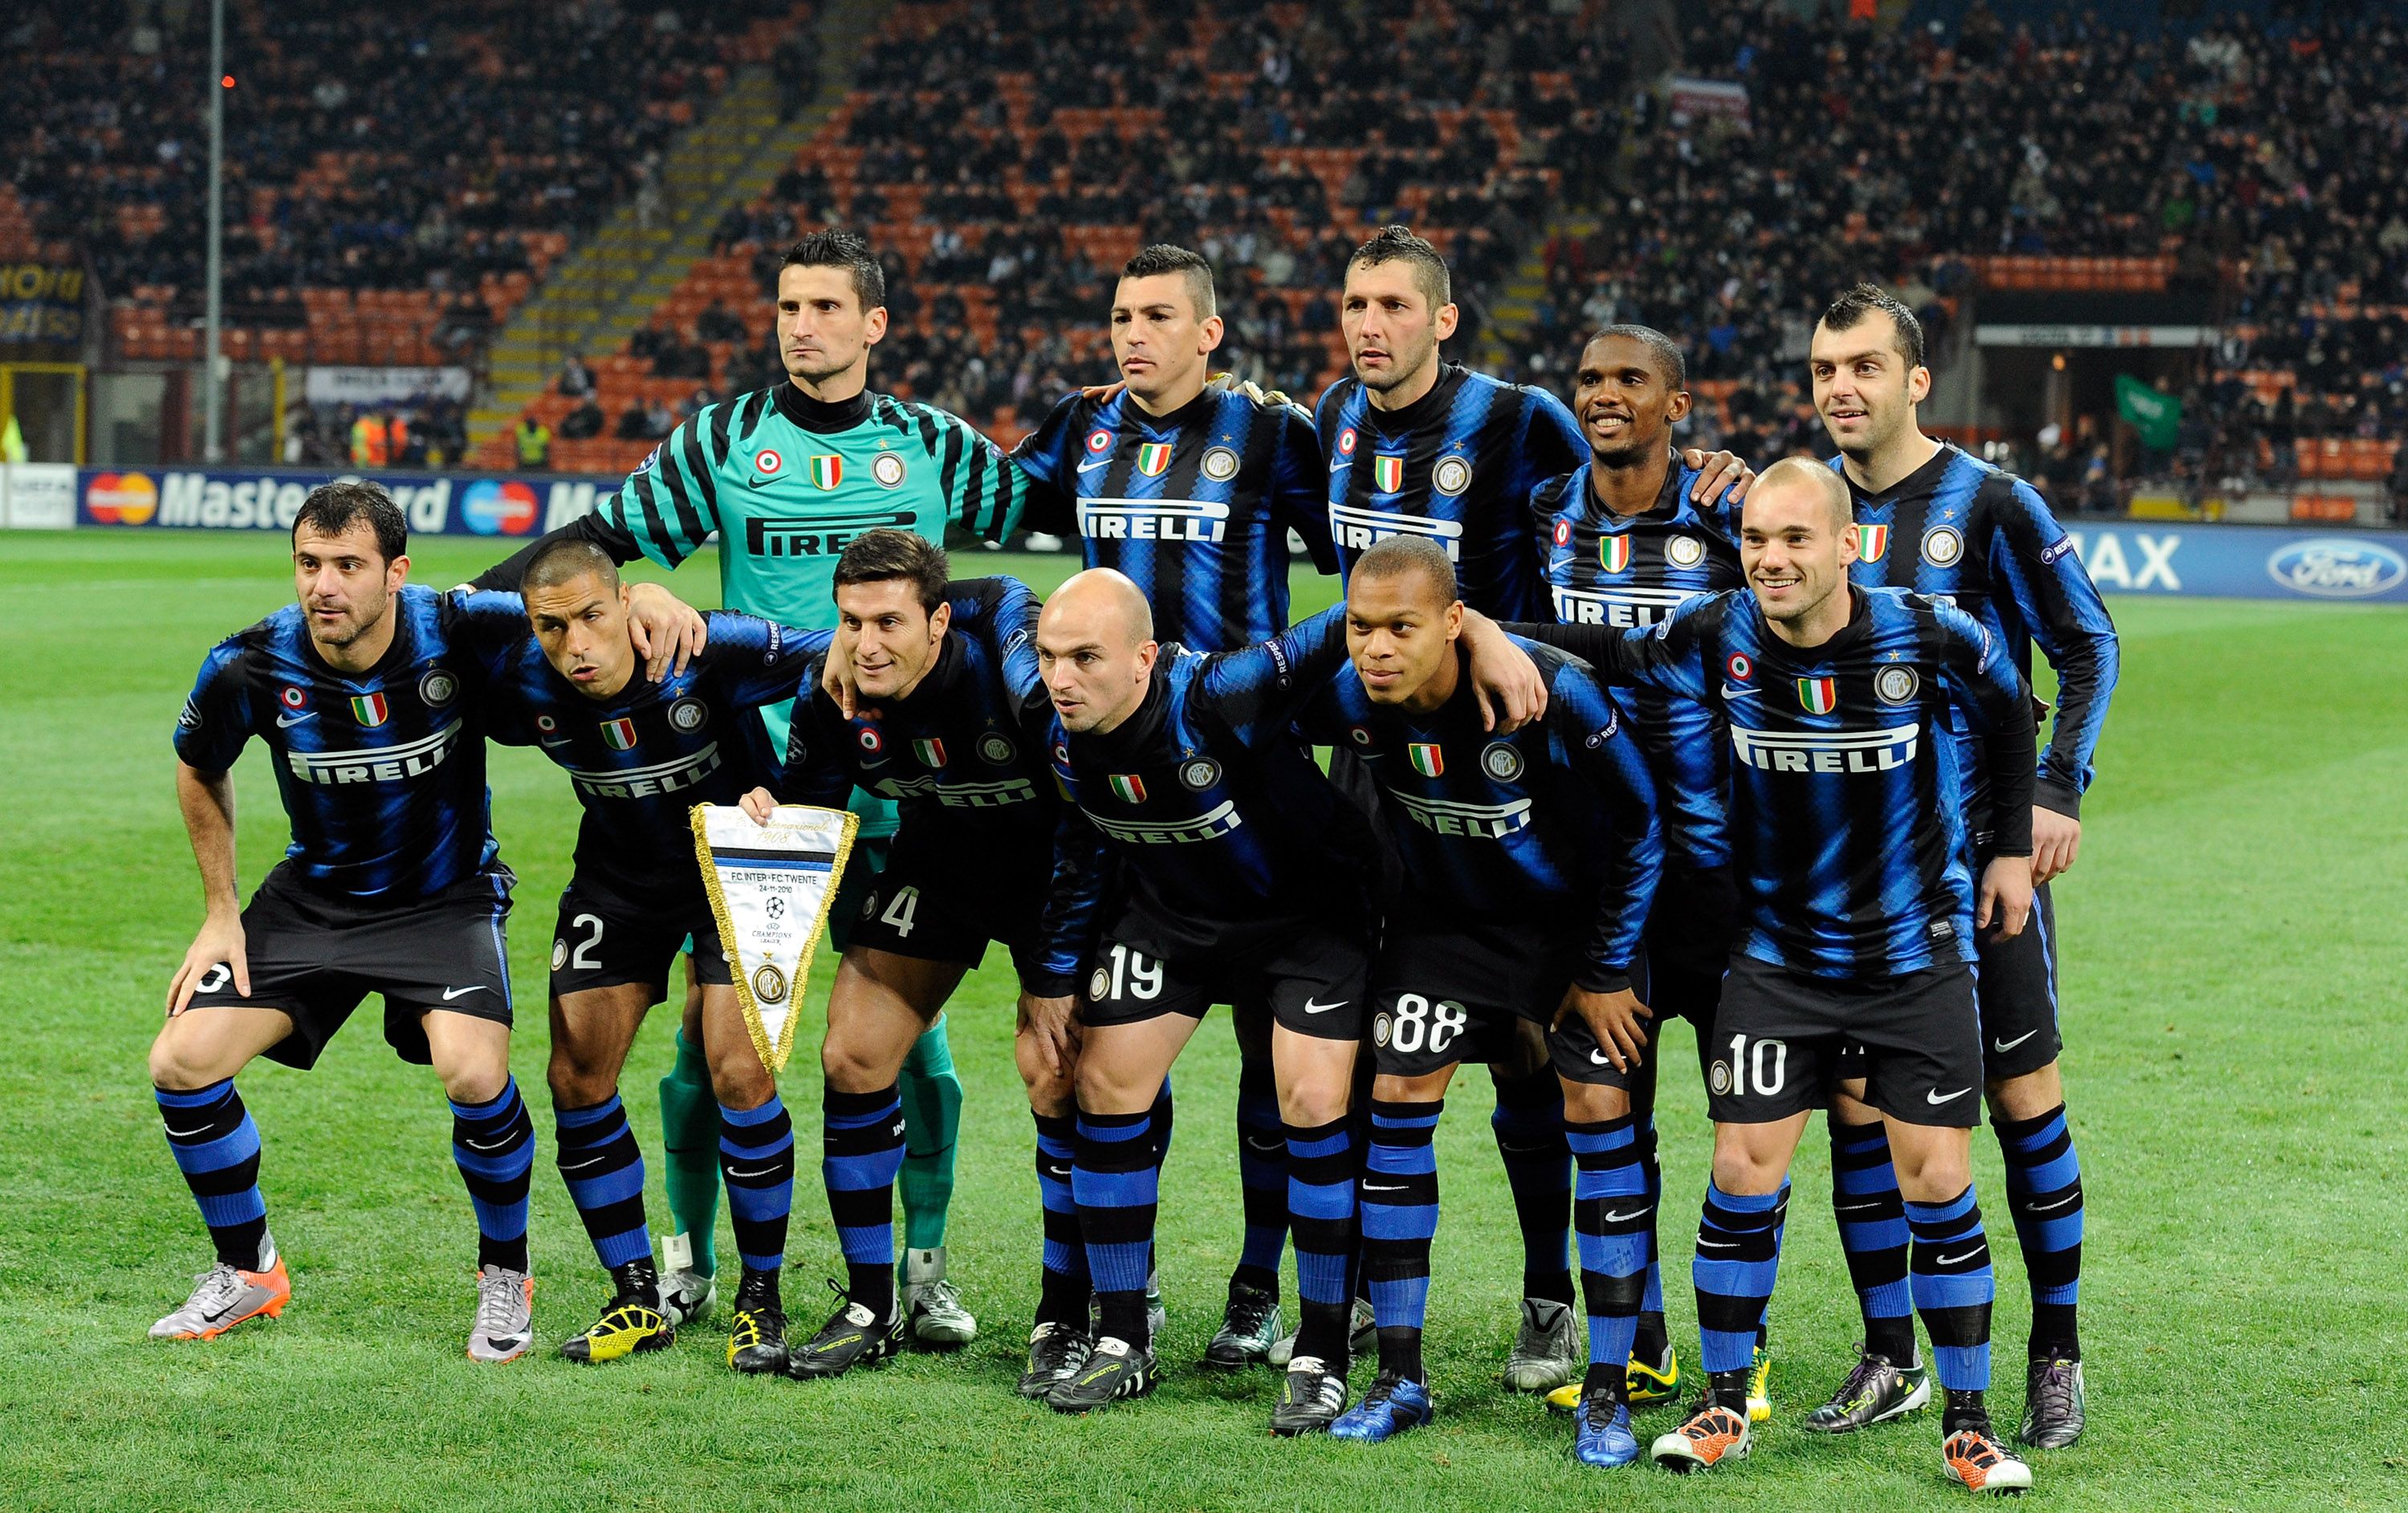 The Inter Milan team of 2010.